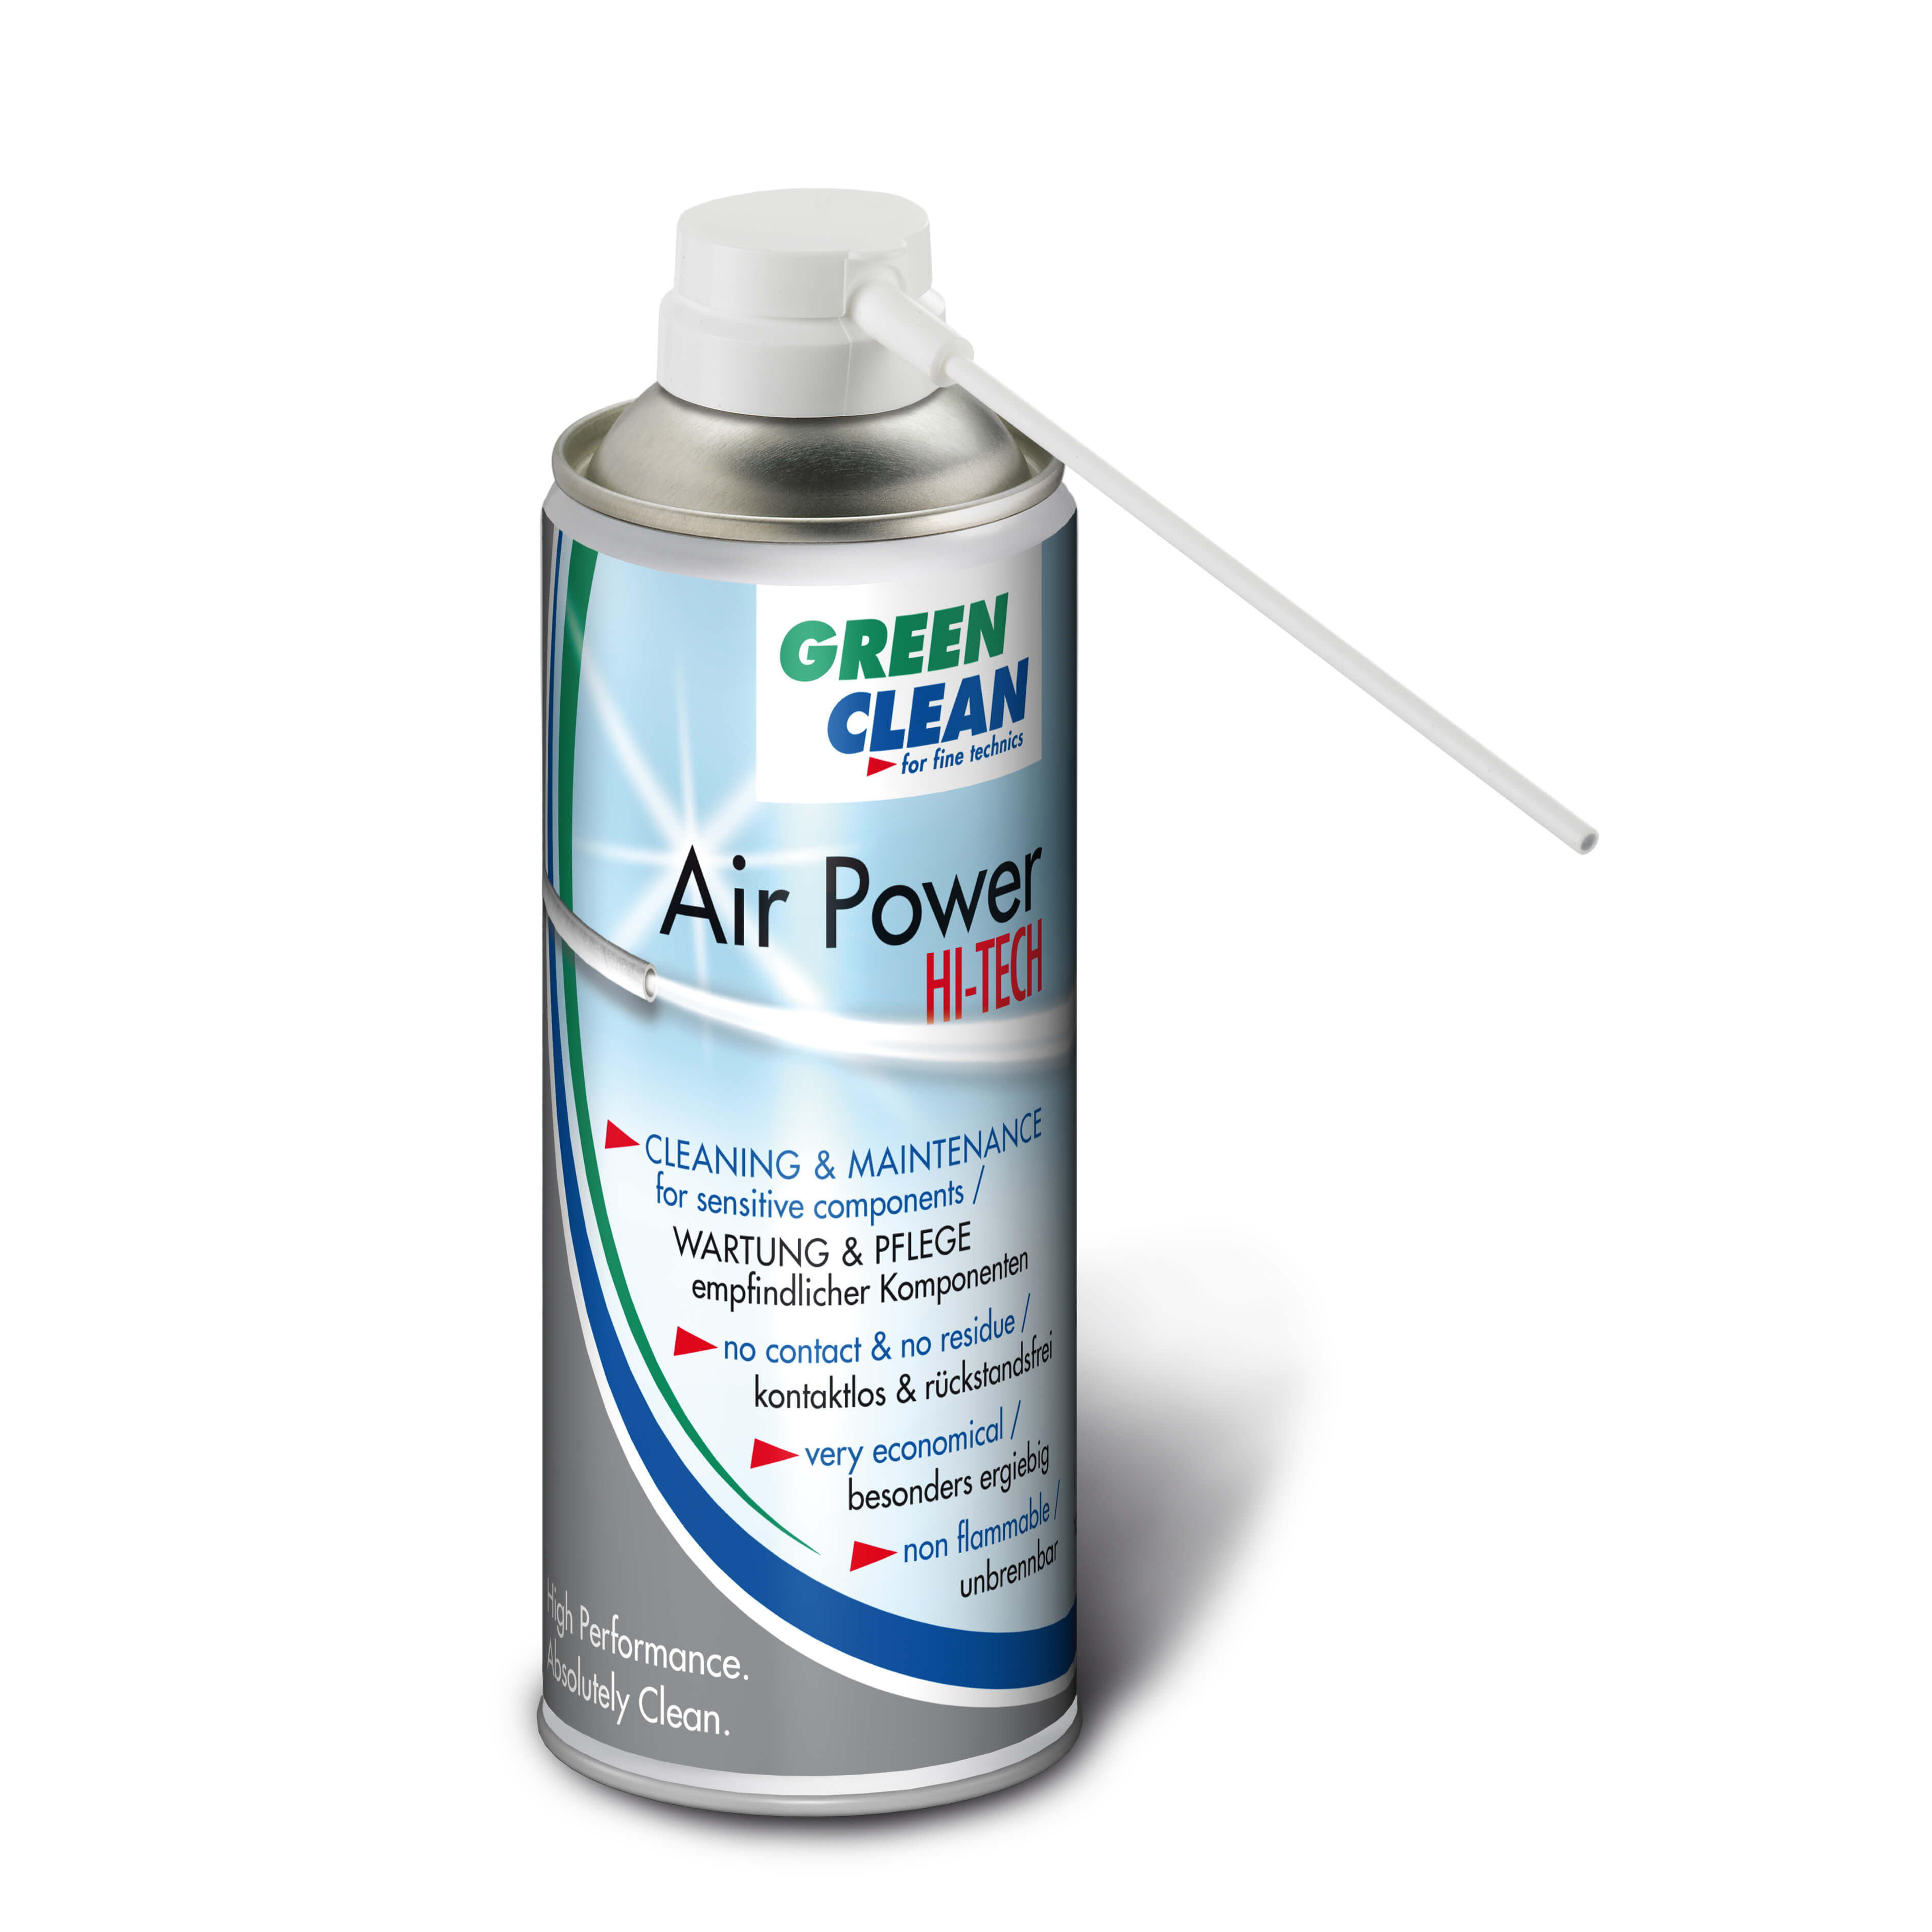 GREEN CLEAN Photo/ Video Compressed Air C leaner G-2050 Air Power Hi T, 